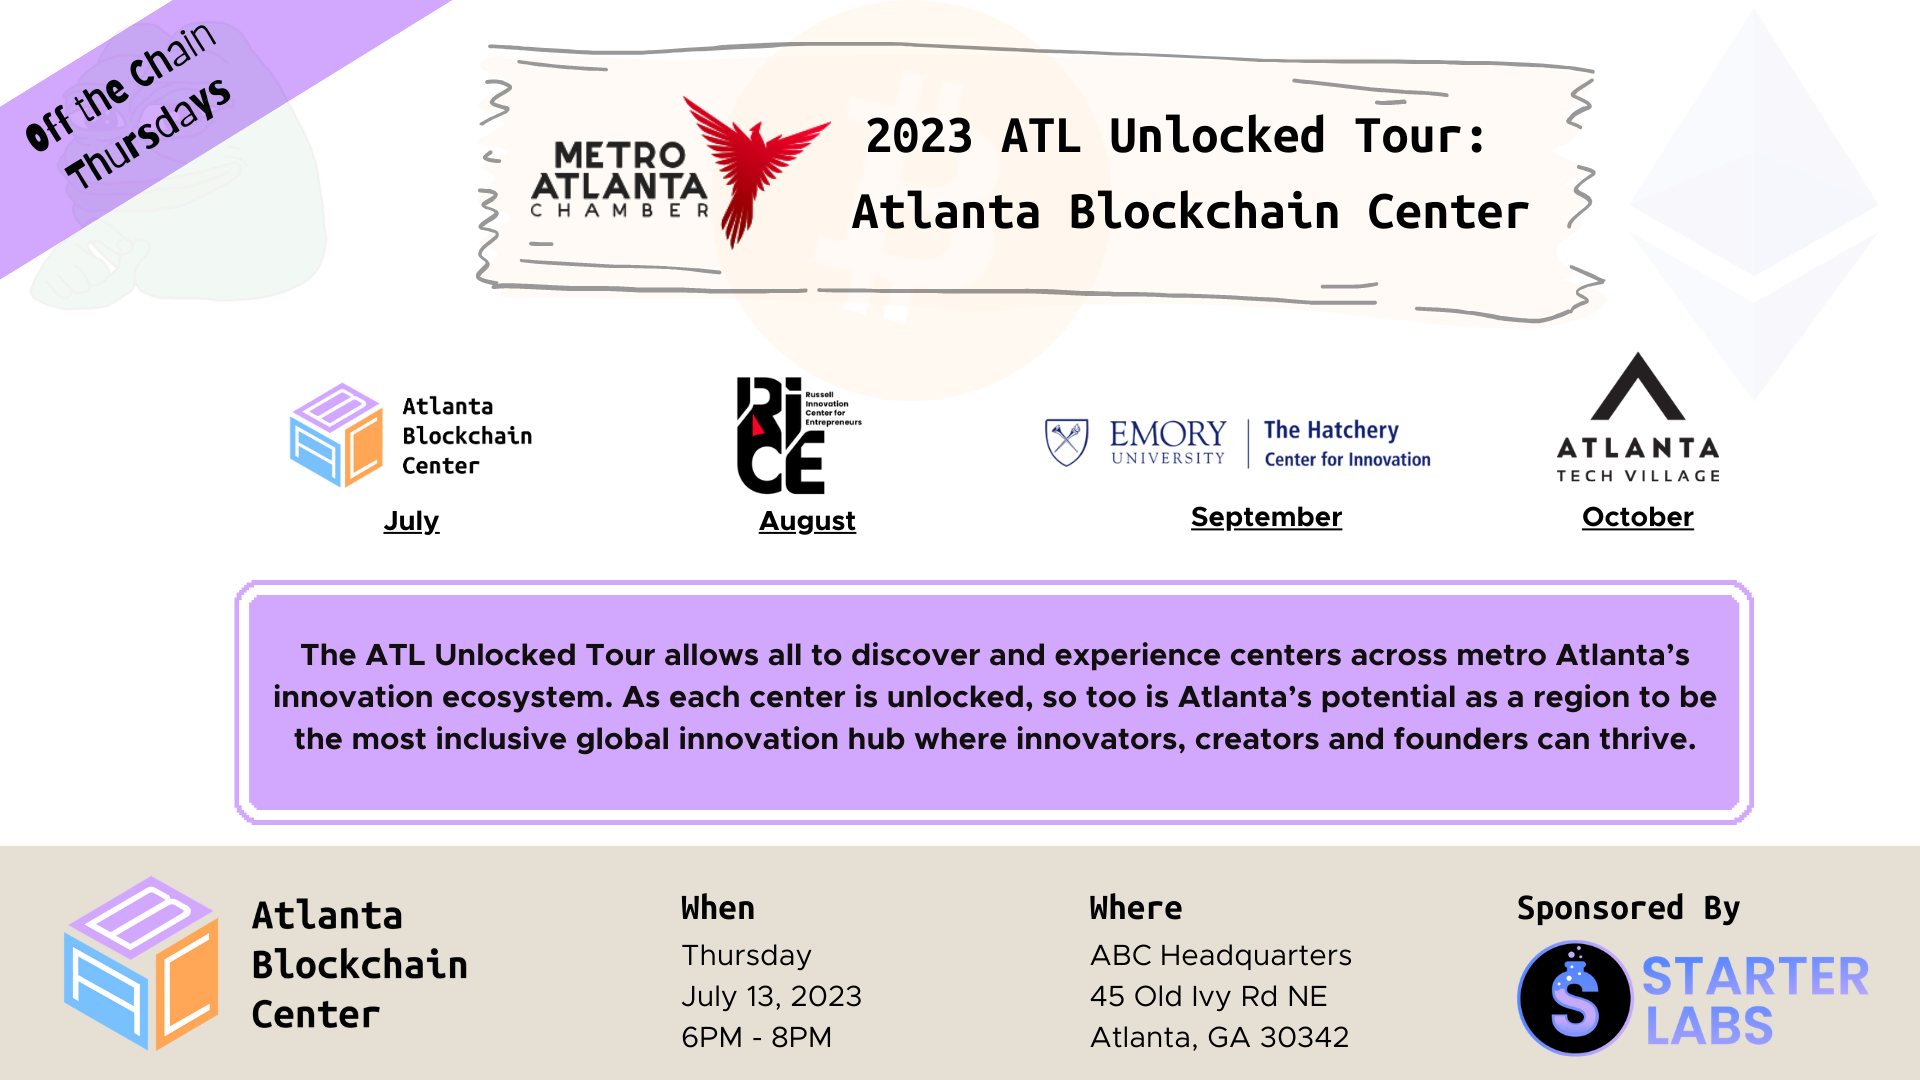 2023 ATL Unlocked Tour: Atlanta Blockchain Center